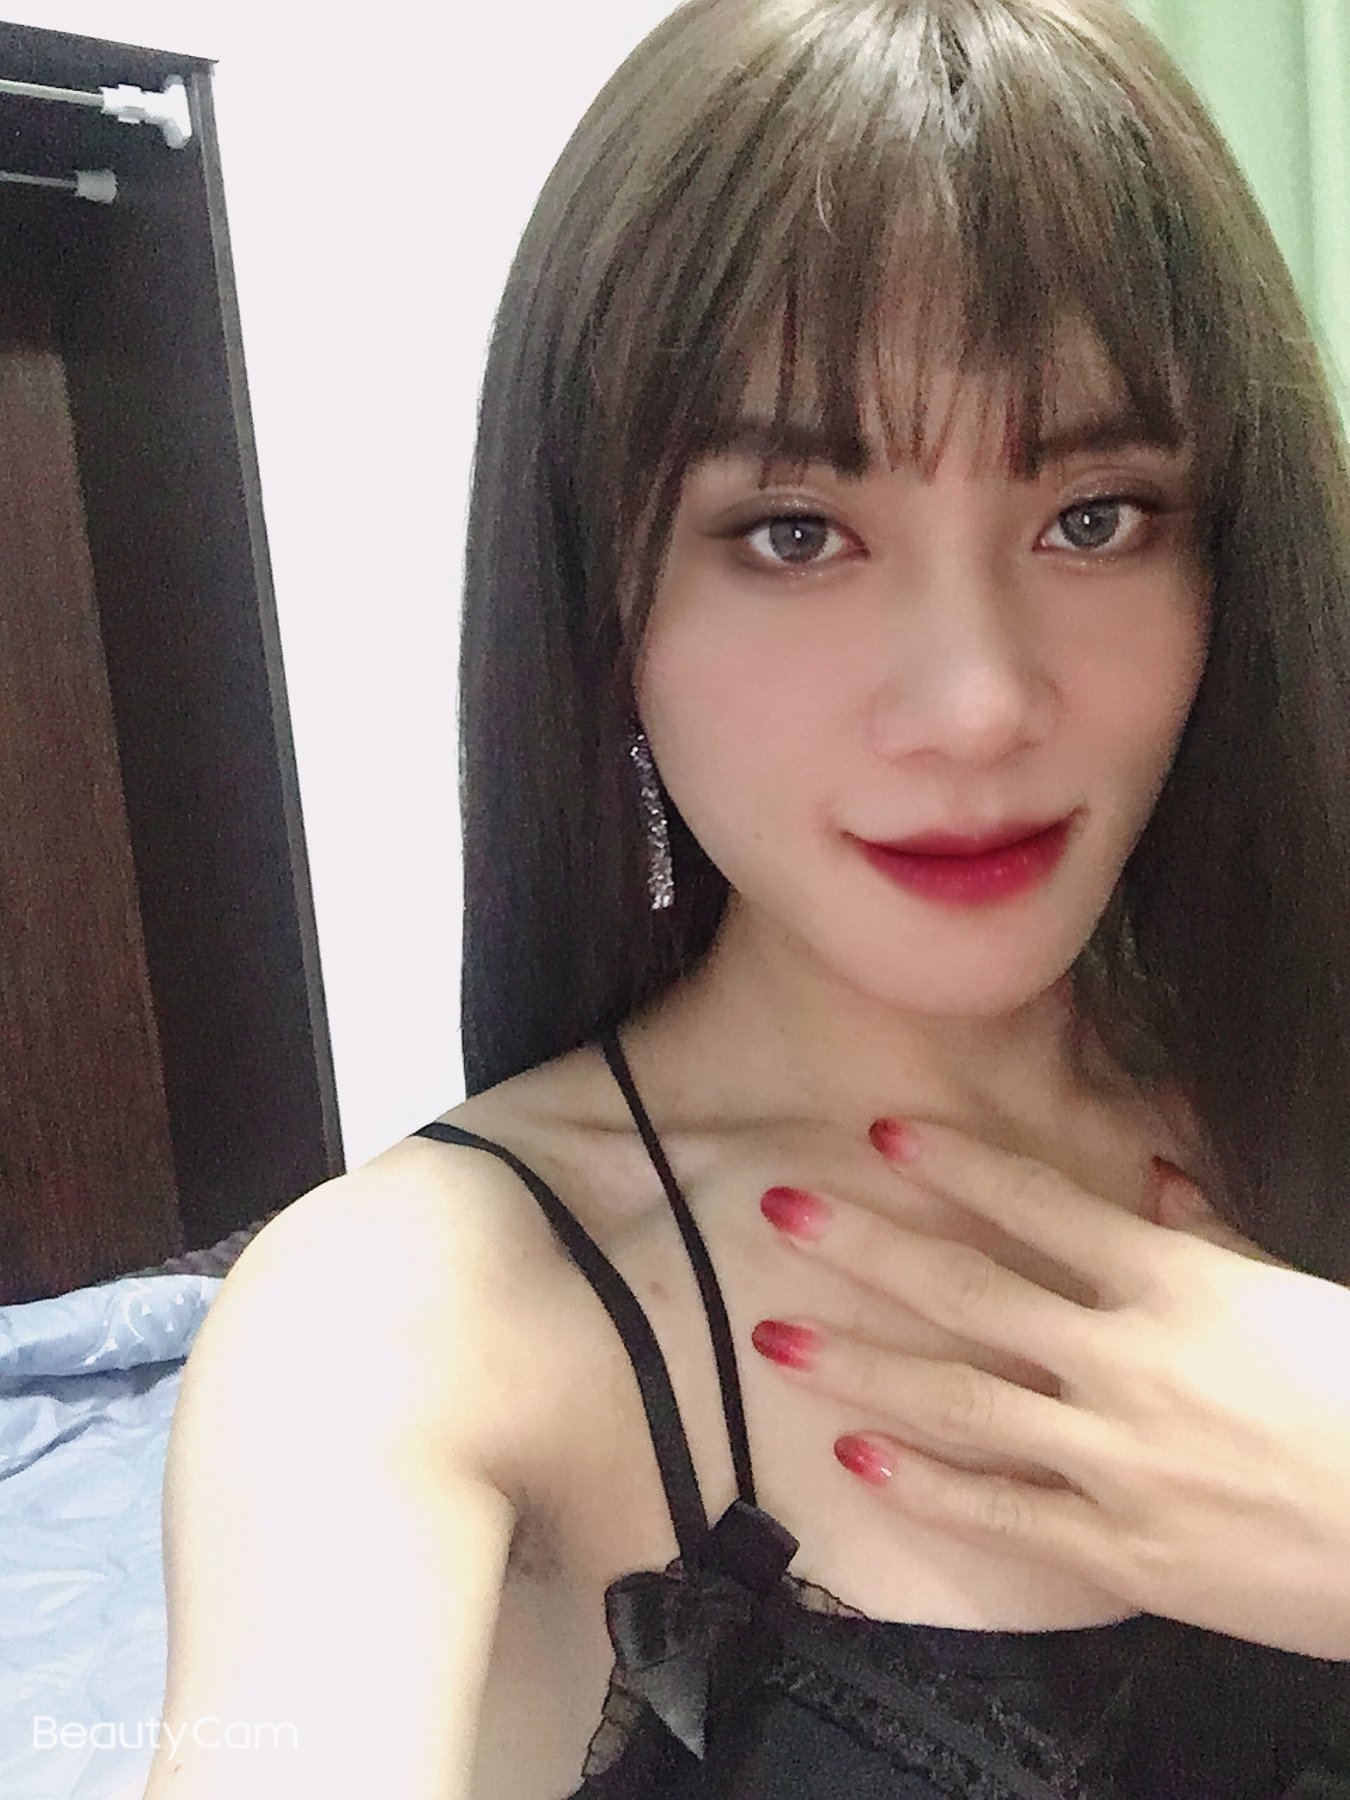 A girl Suzhou sex in has with girl Sex girl